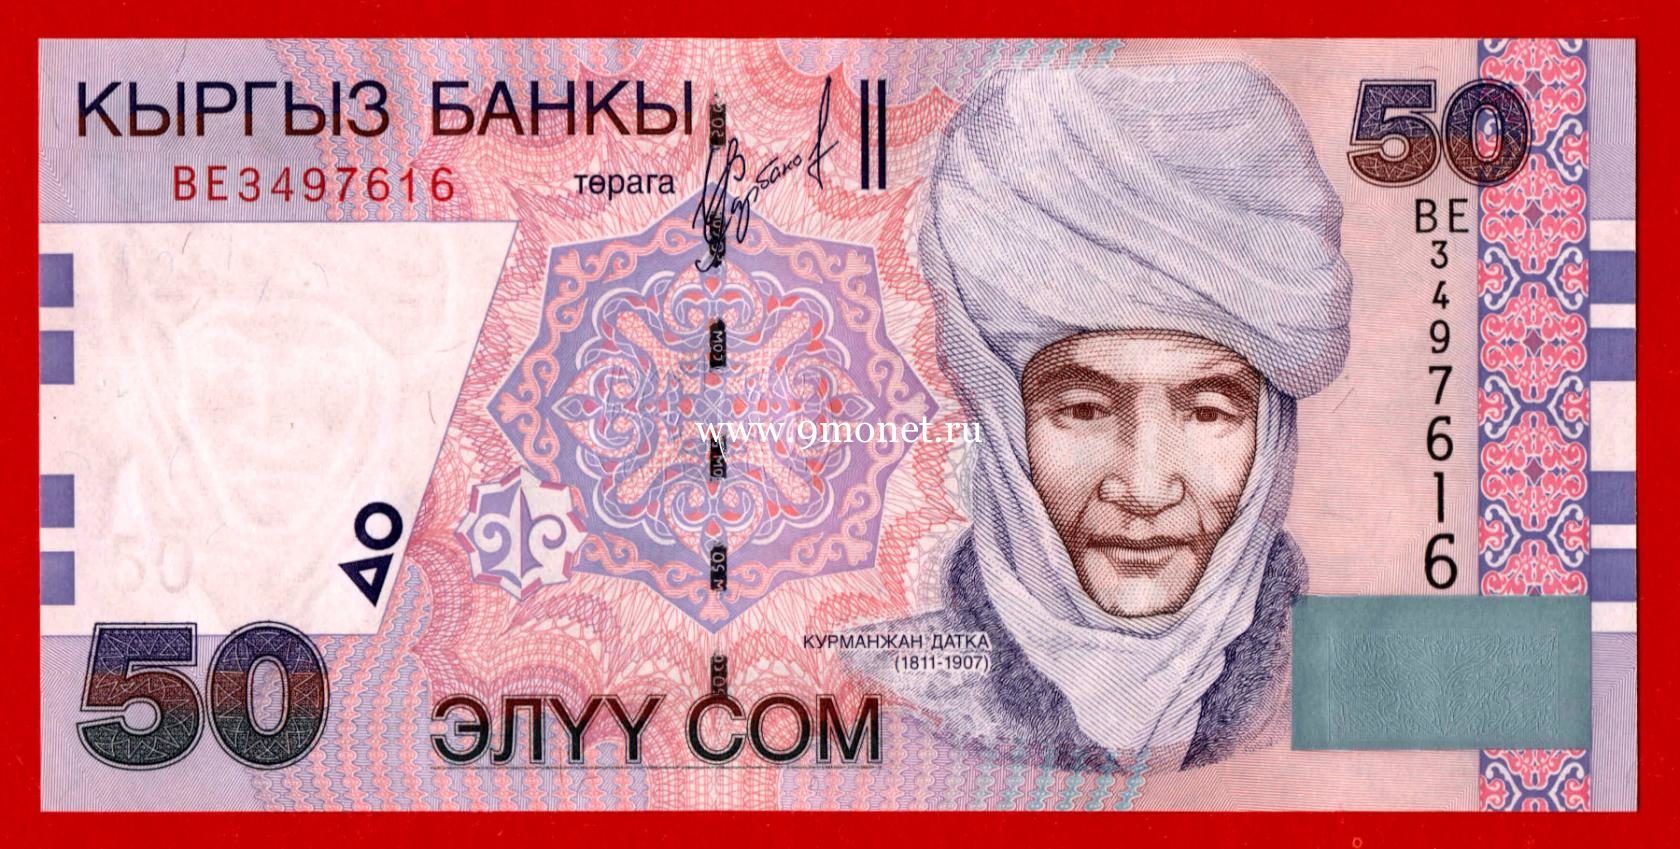 Банкнота Киргизии 50 сом 2002 года.